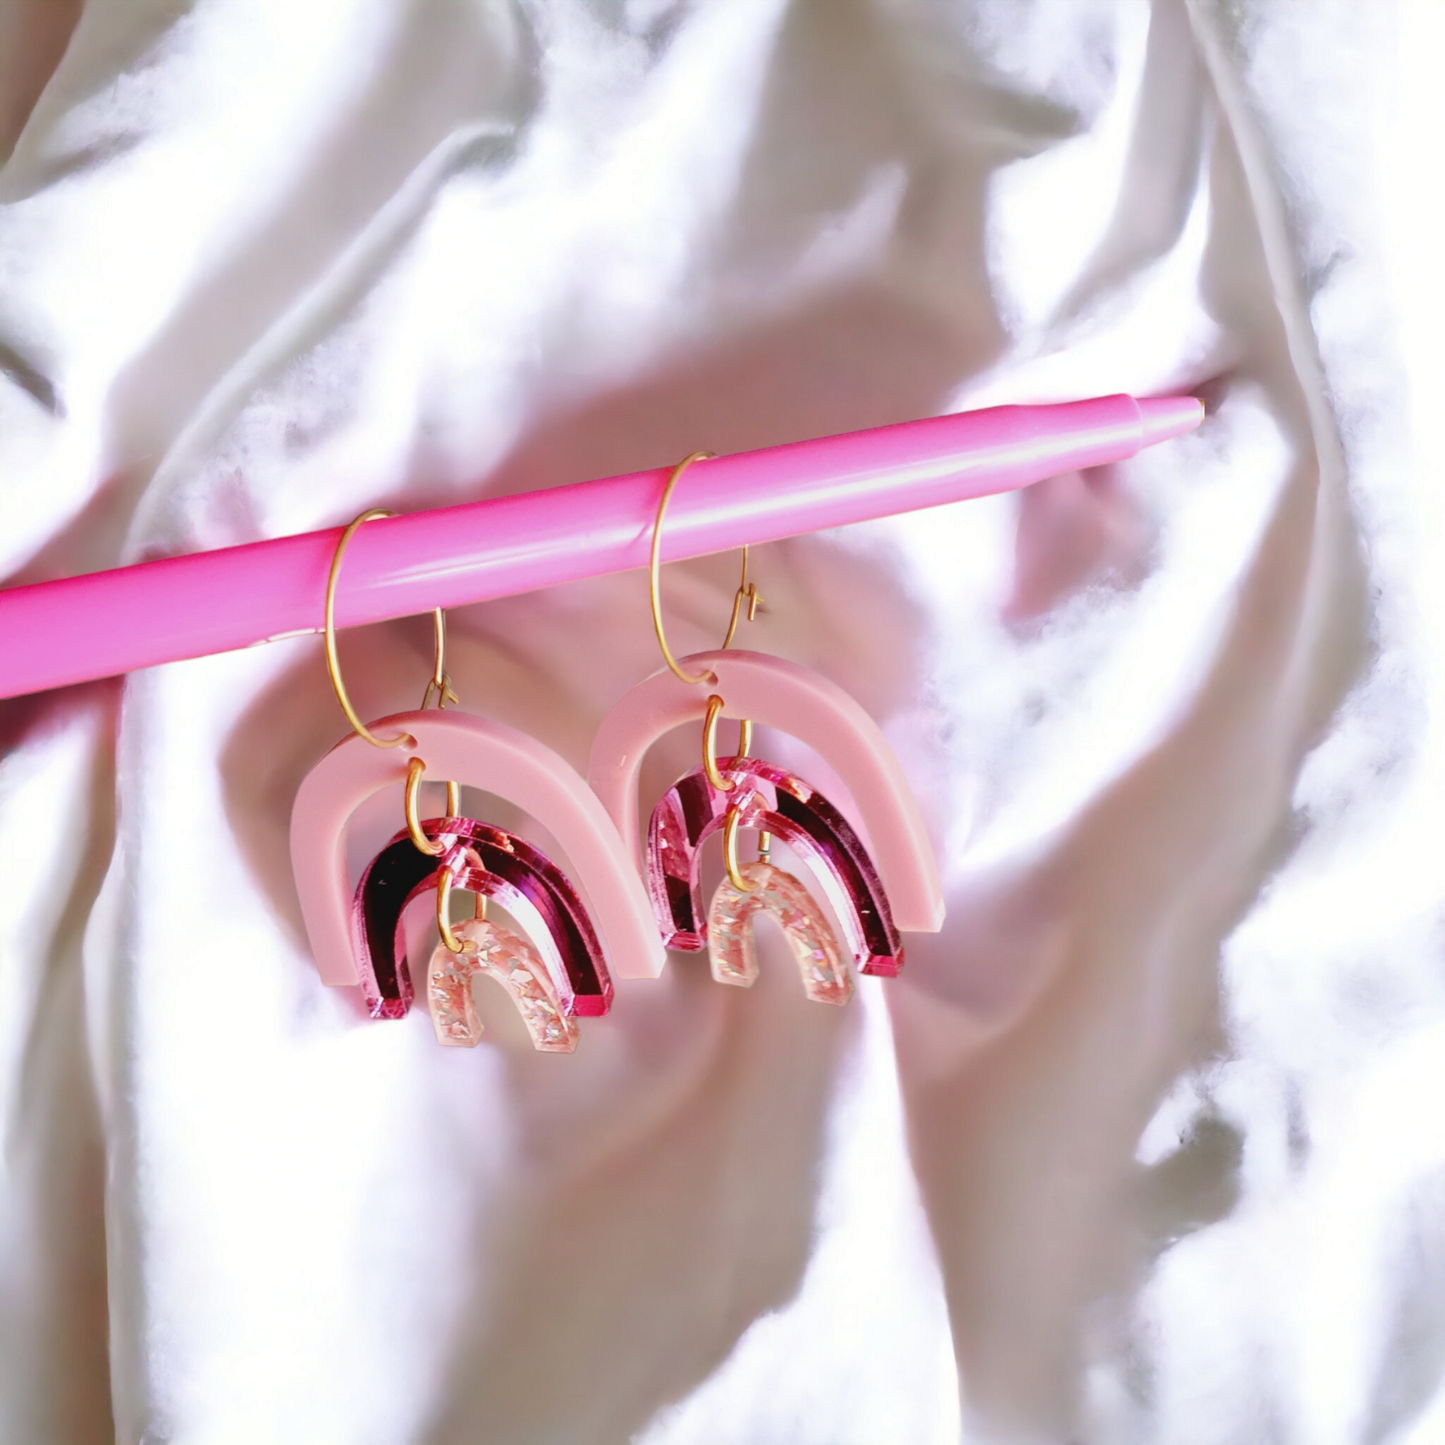 Rainbow Acrylic Earrings "Pink Lemonade" Dangle Earrings